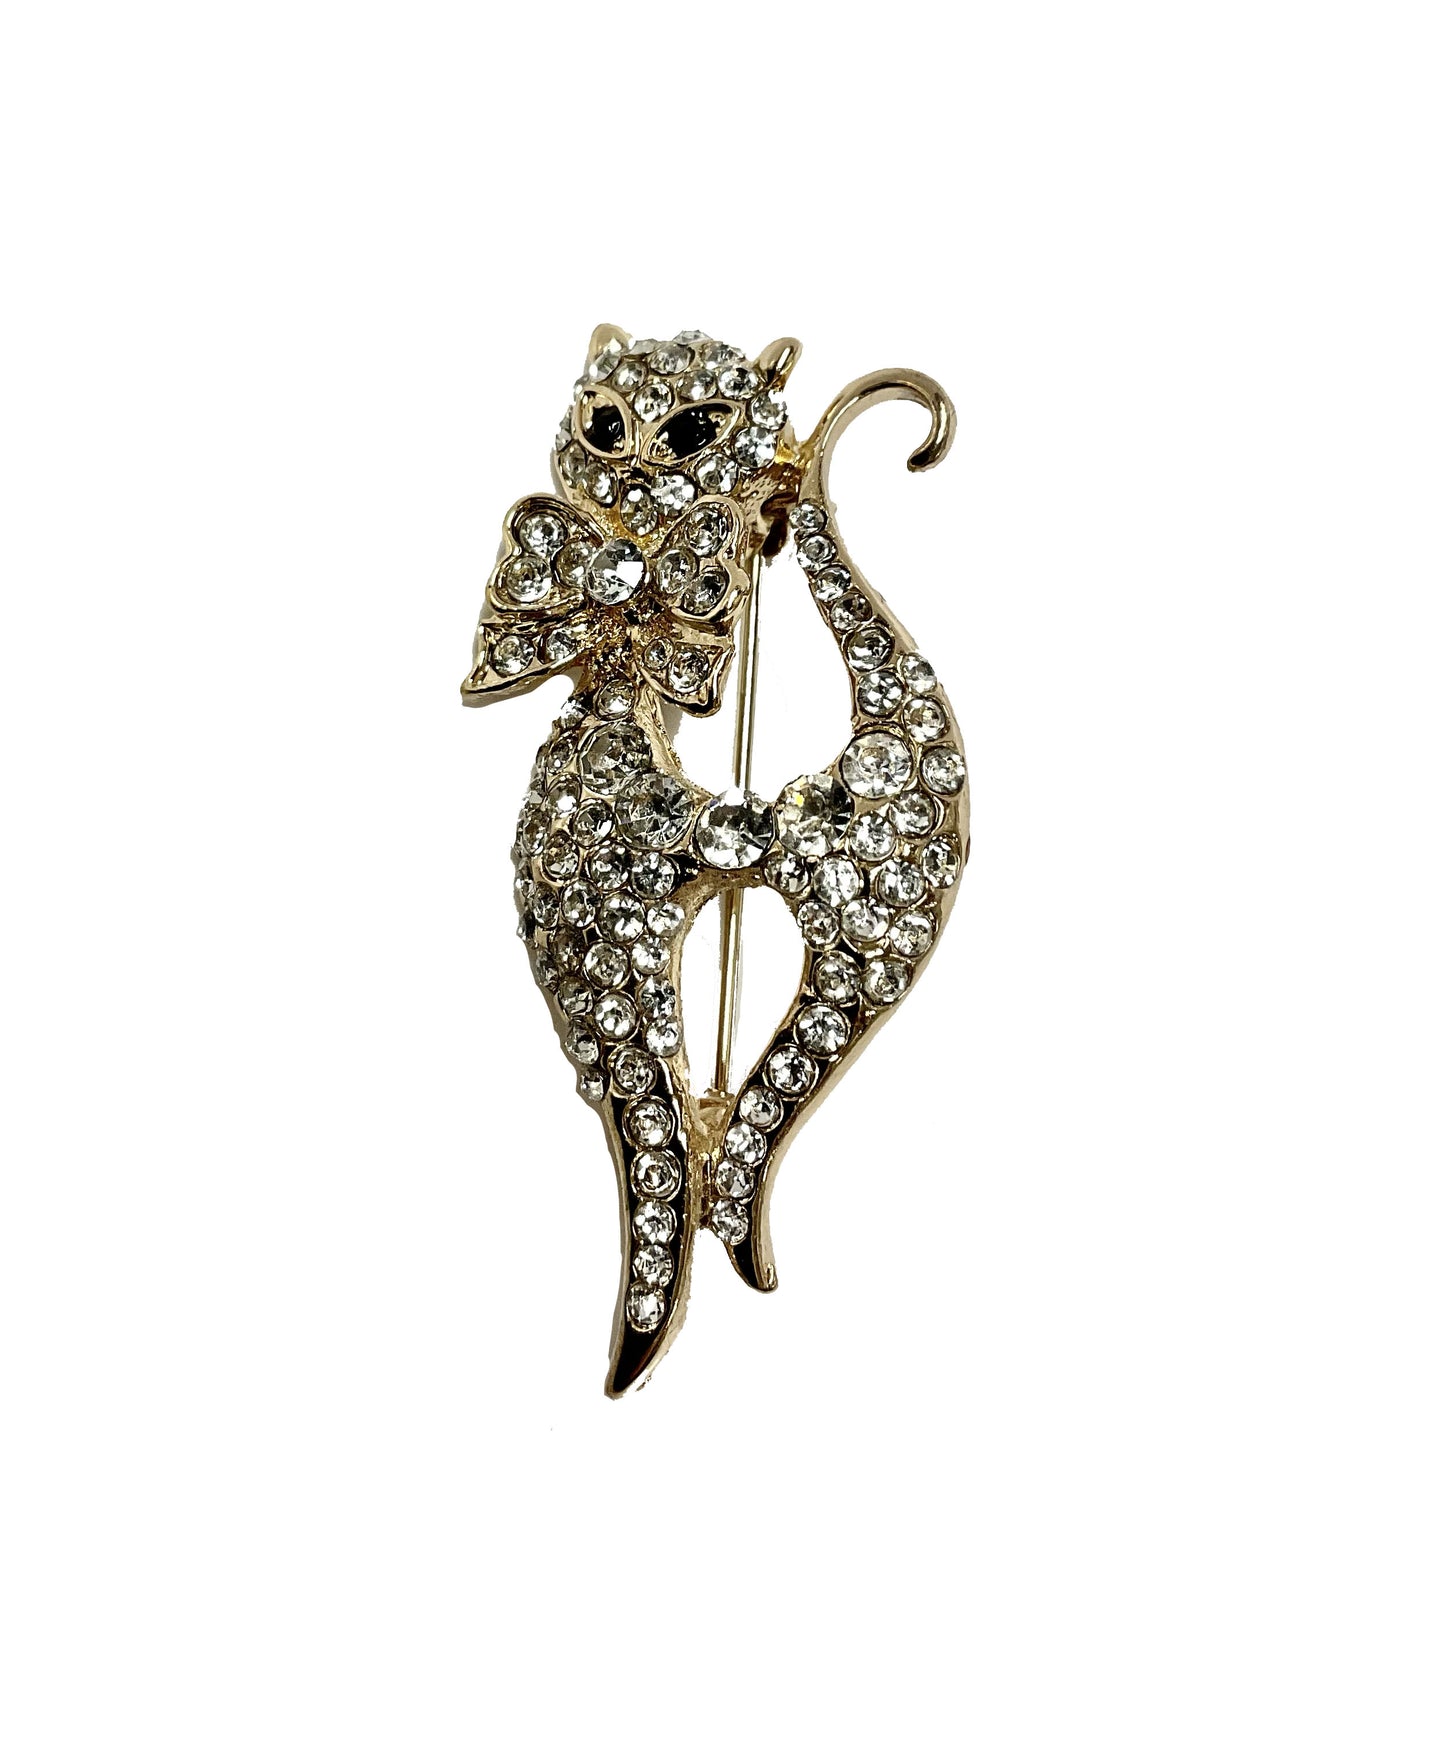 Fashion Cat Pin#40-2501